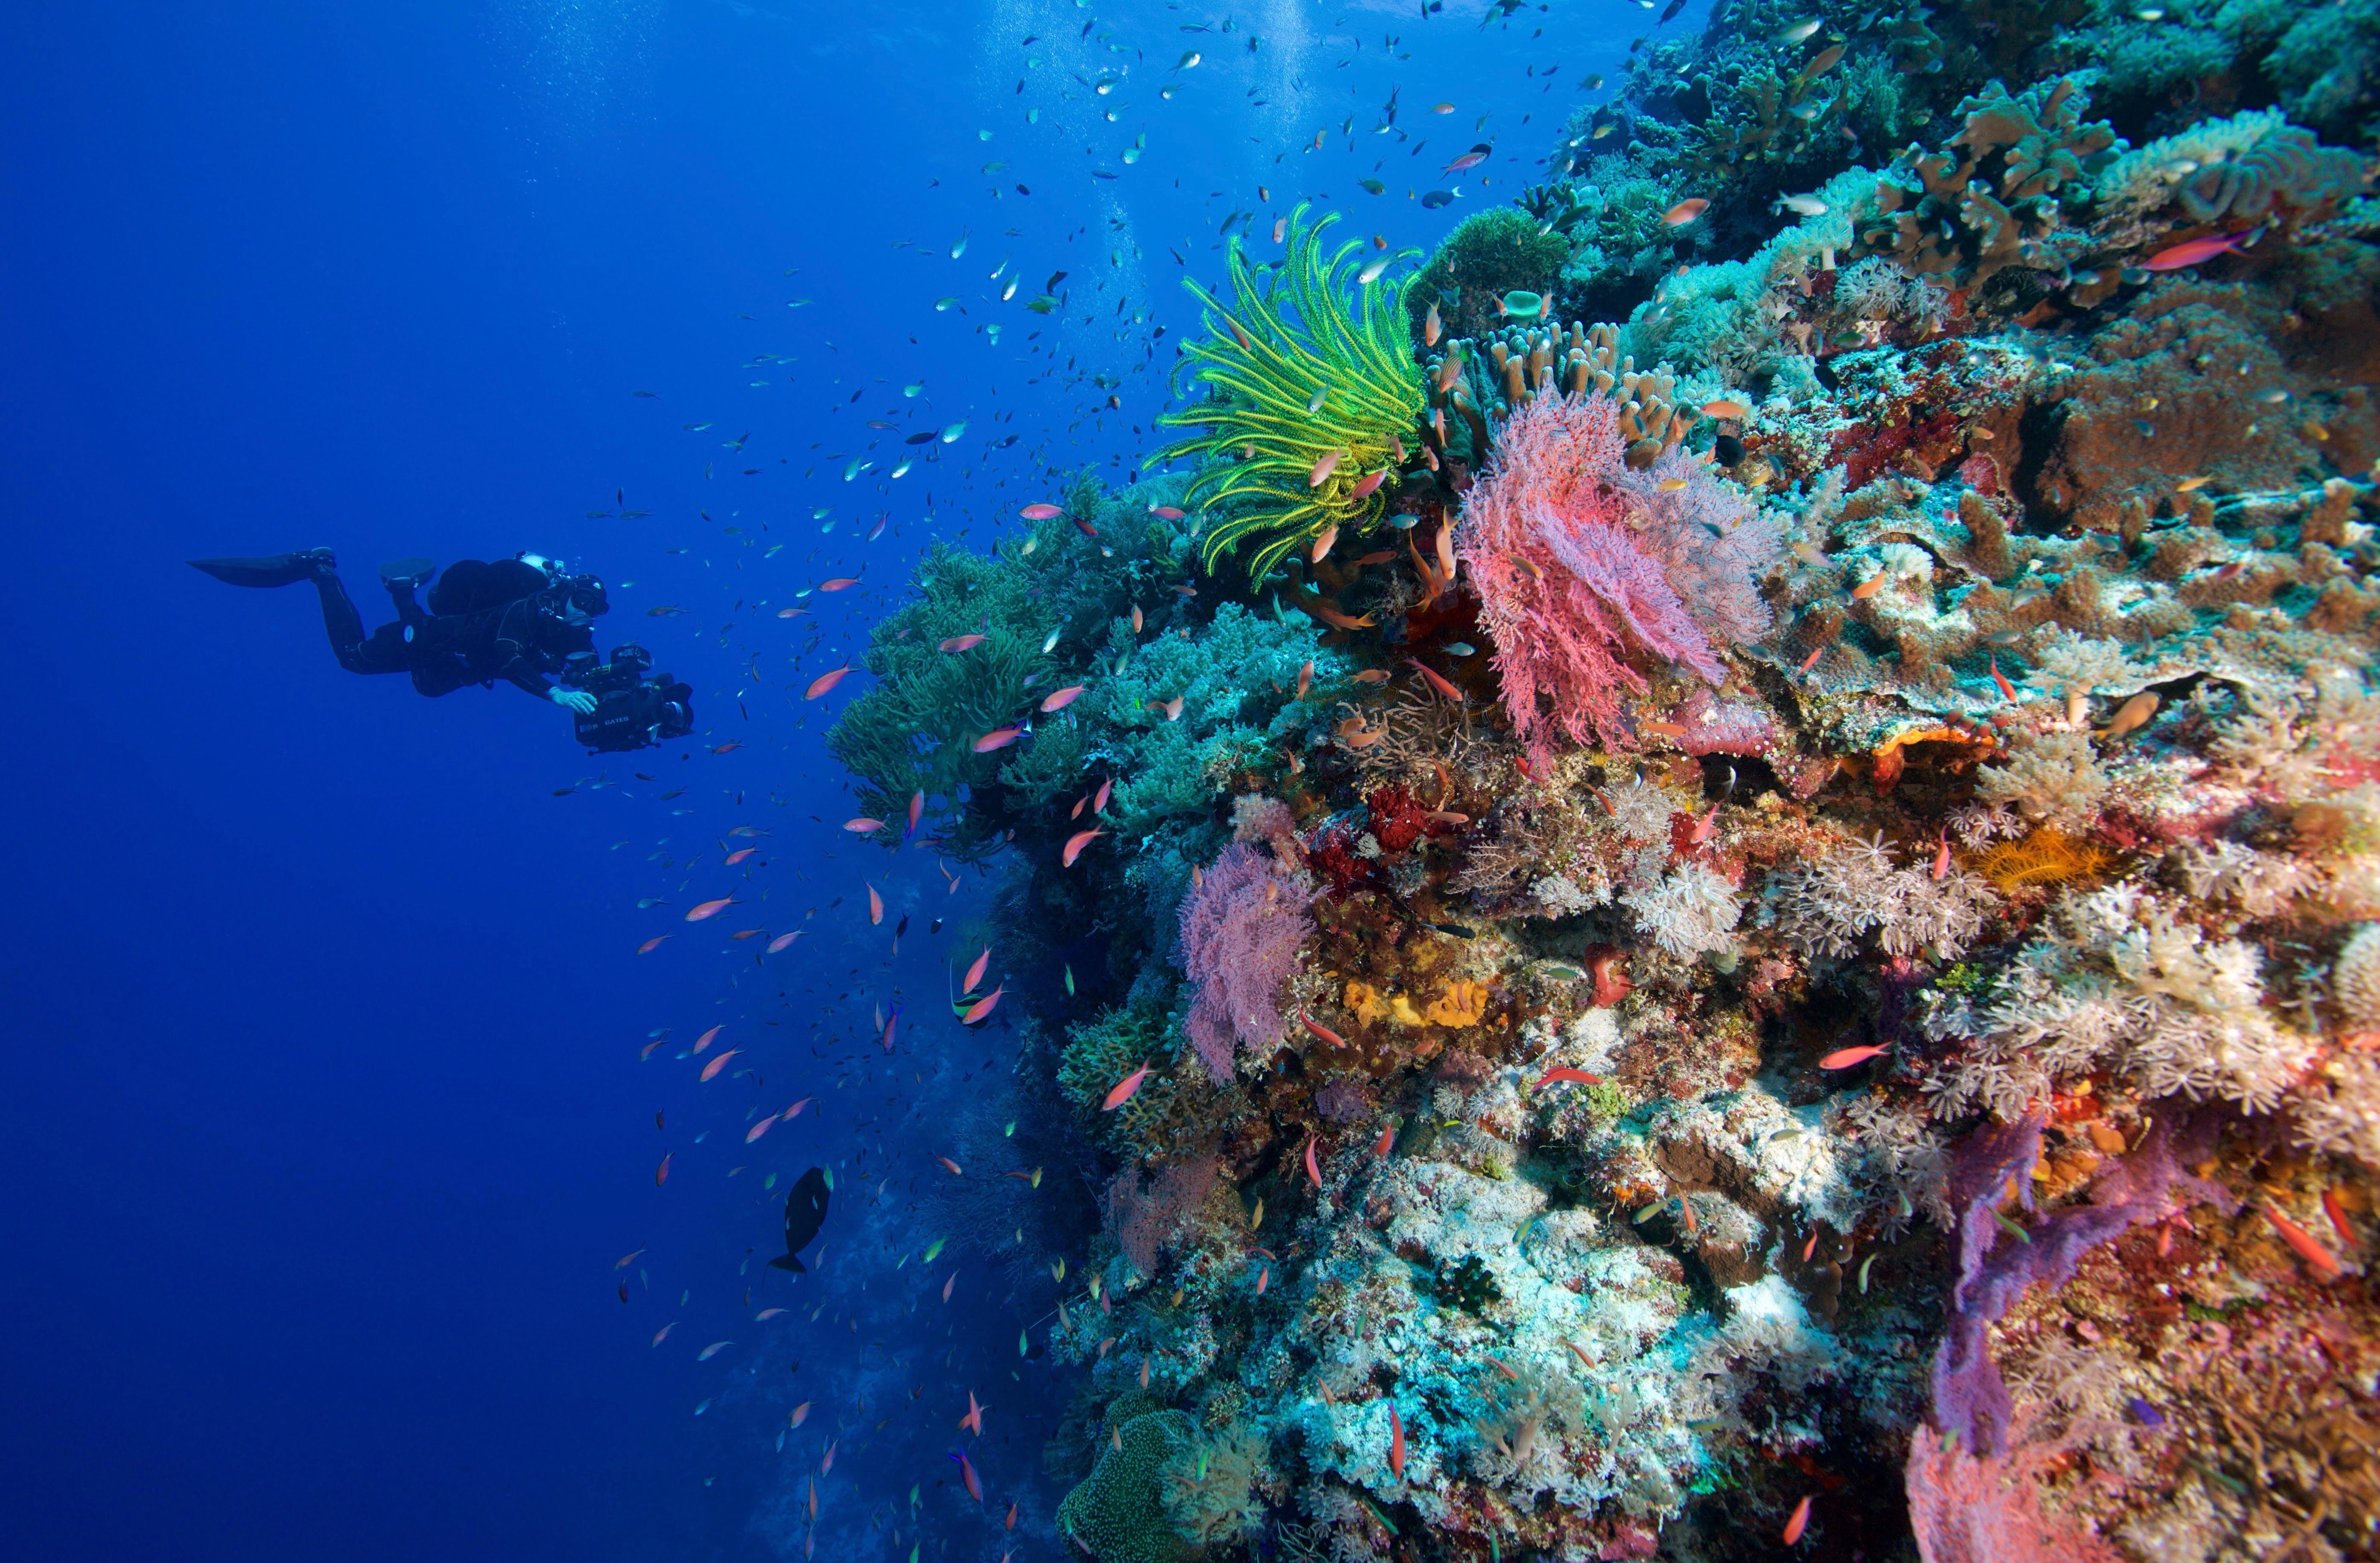 Healthy coral reef with scuba diver exploring